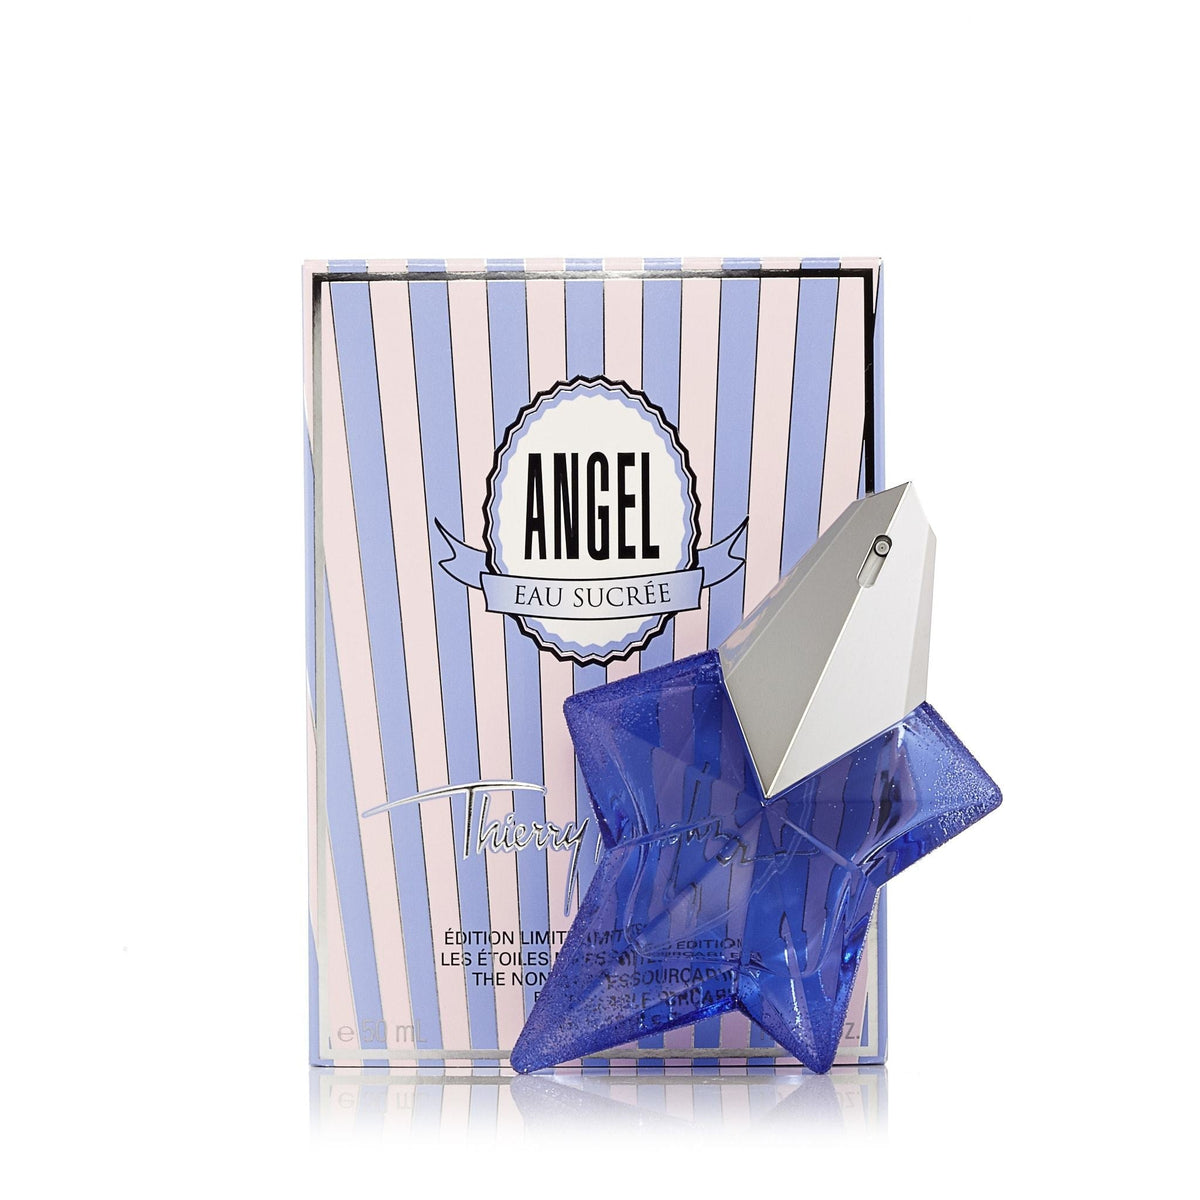 Angel Eau Sucree Eau de Toilette Spray for Women by Thierry Mugler 1.7 oz.